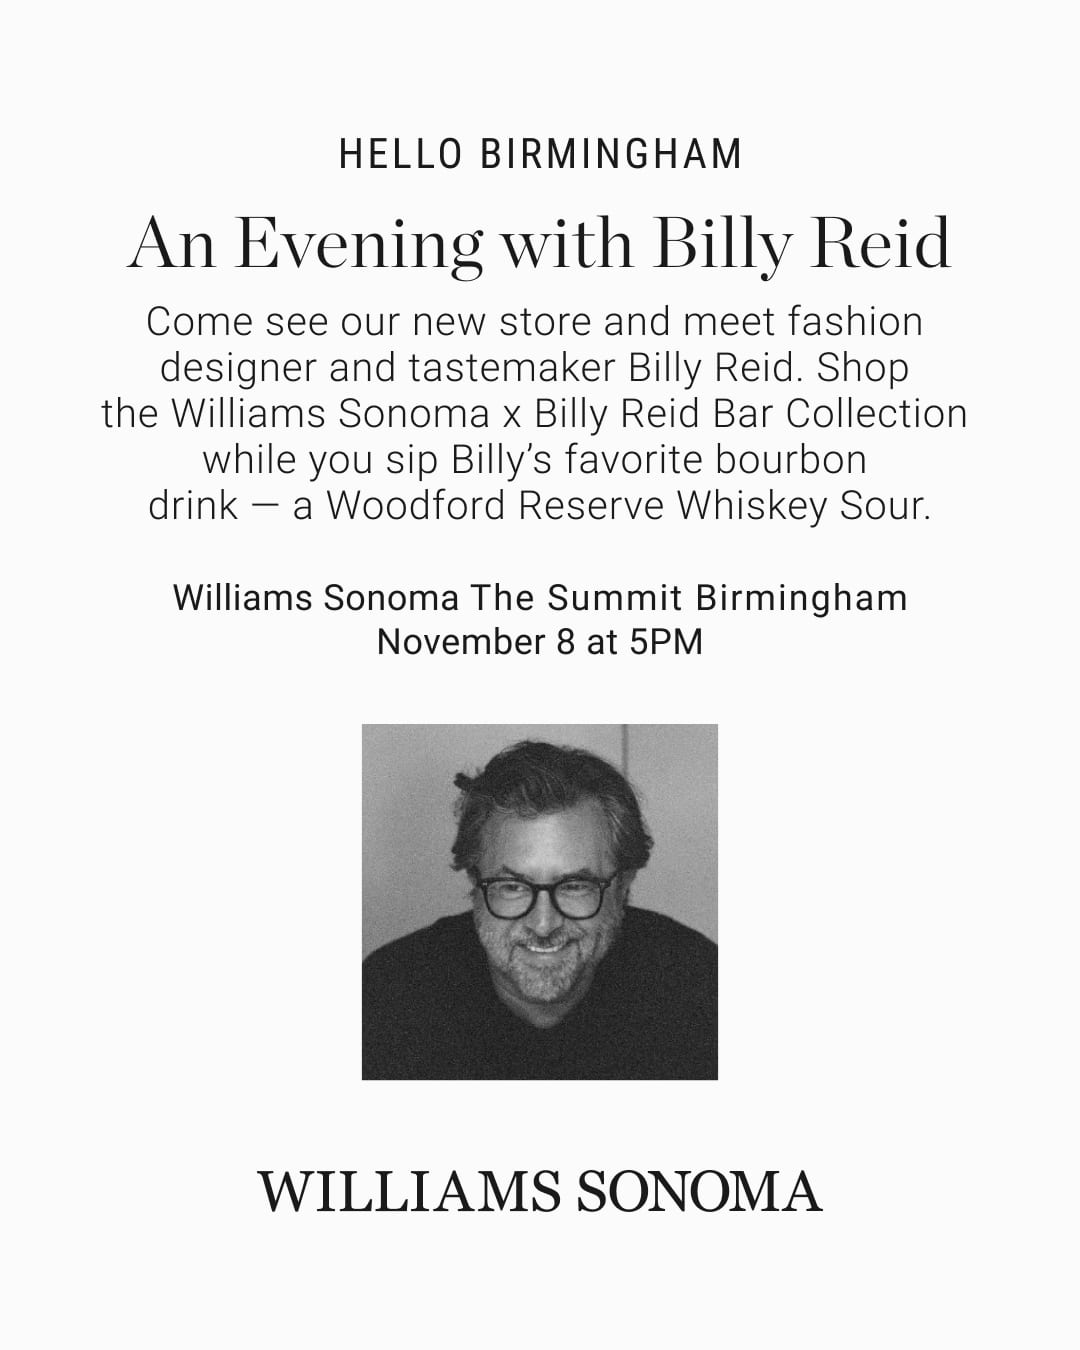 Williams Sonoma: An Evening with Billy Reid - The Summit BirminghamThe ...